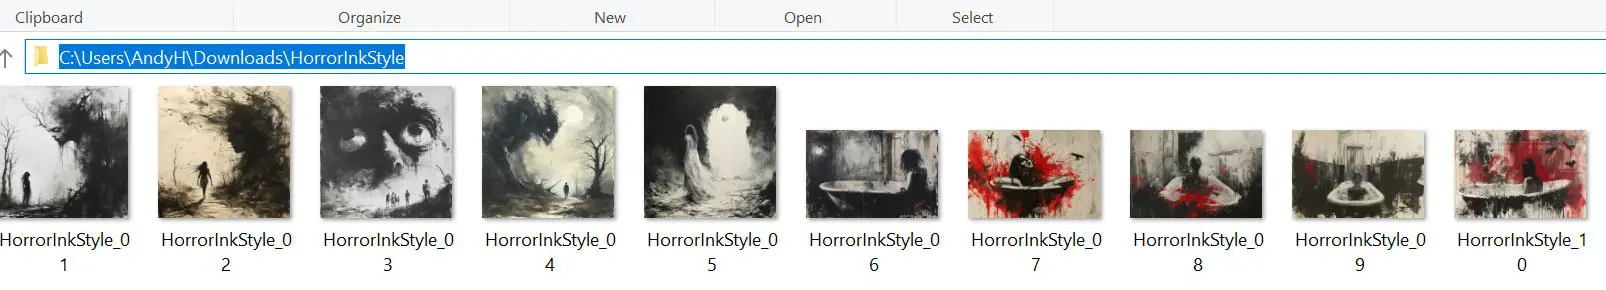 image thumbnails of horror art